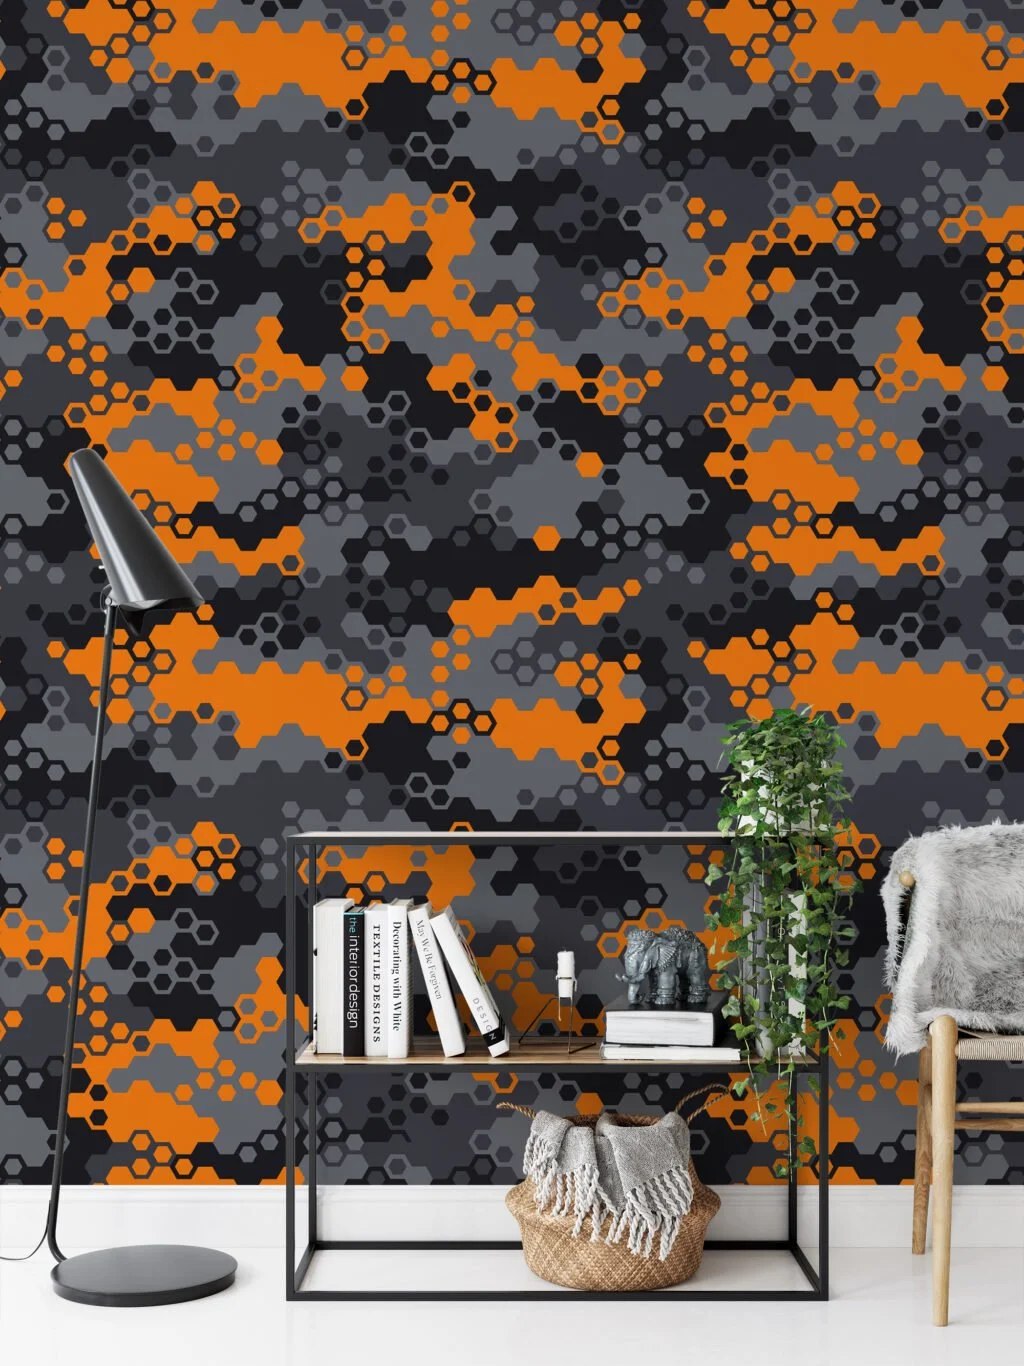 Abstract Grey And Orange Hexagon Geometric Shaped Illustration Wallpaper, Modern Home Decor Peel & Stick Wall Mural